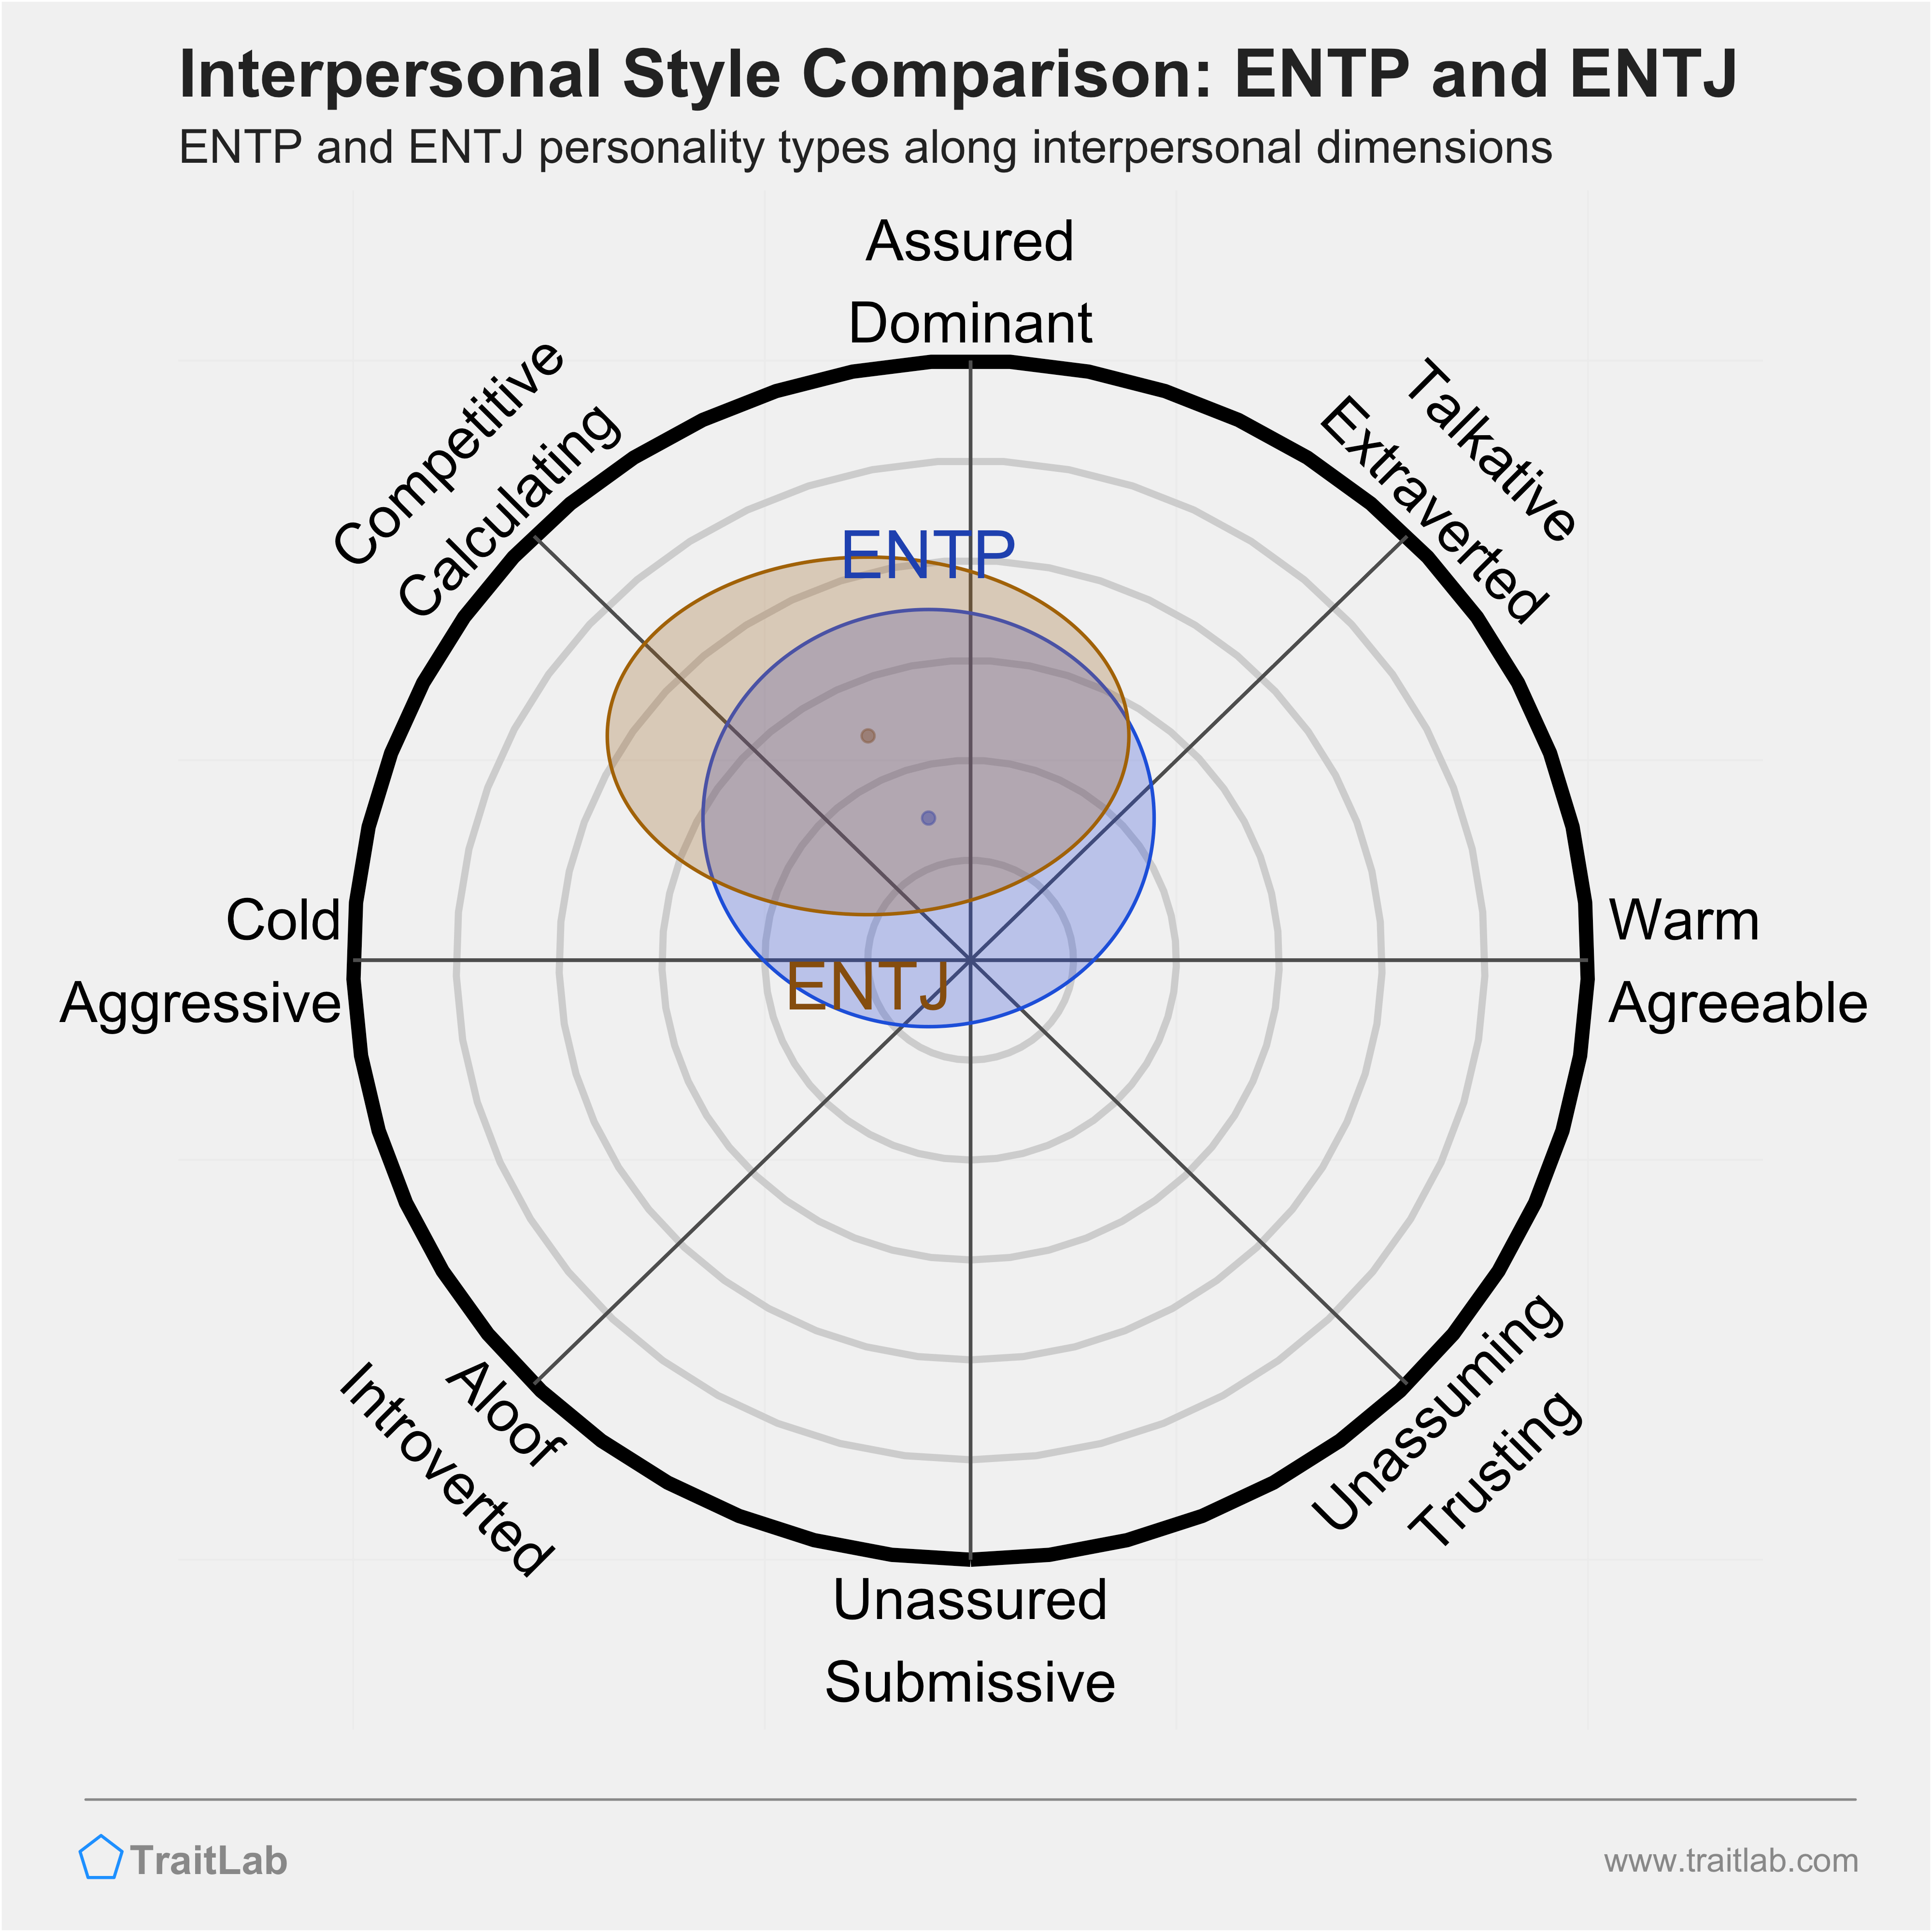 ENTP and ENTJ comparison across interpersonal dimensions